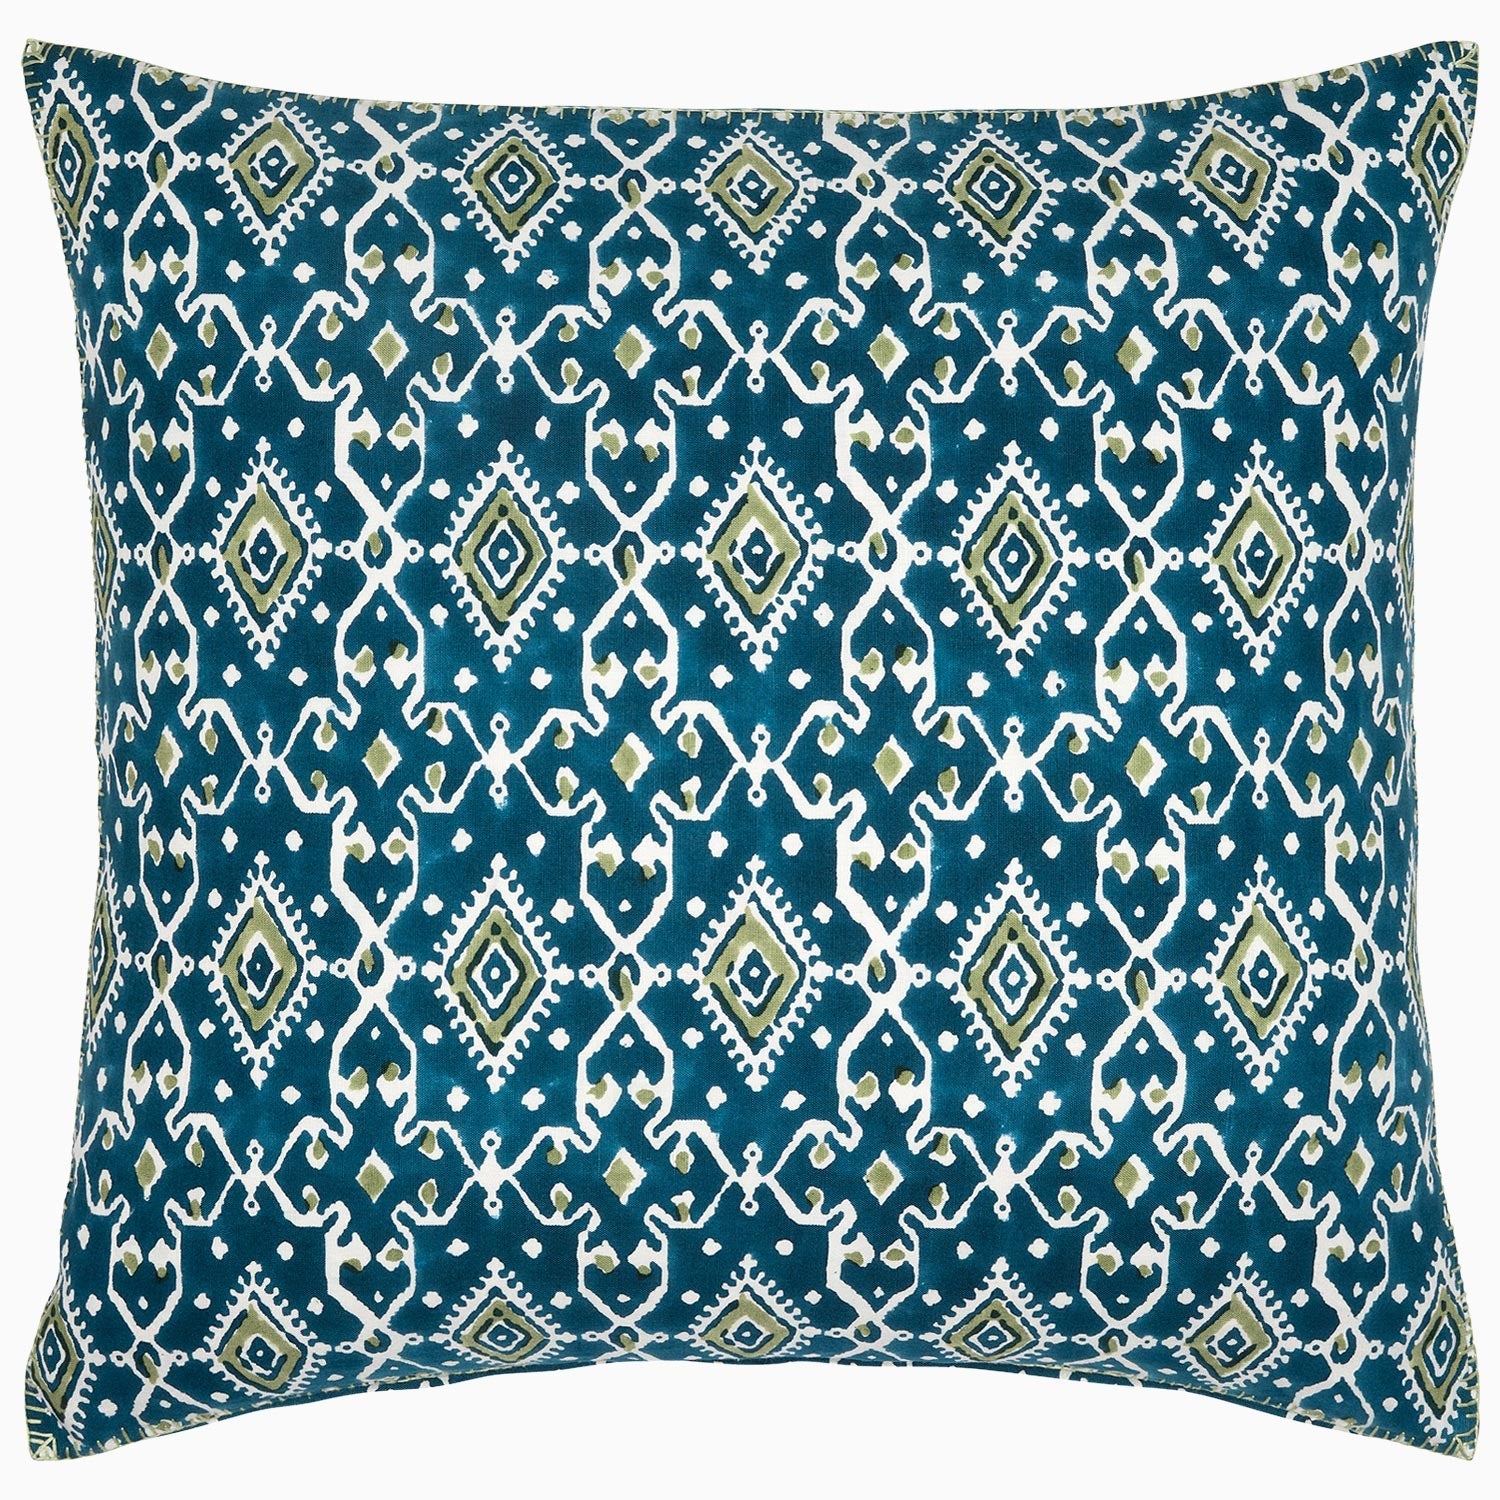 John Robshaw Alagan Peacock Decorative Pillow w/ Insert